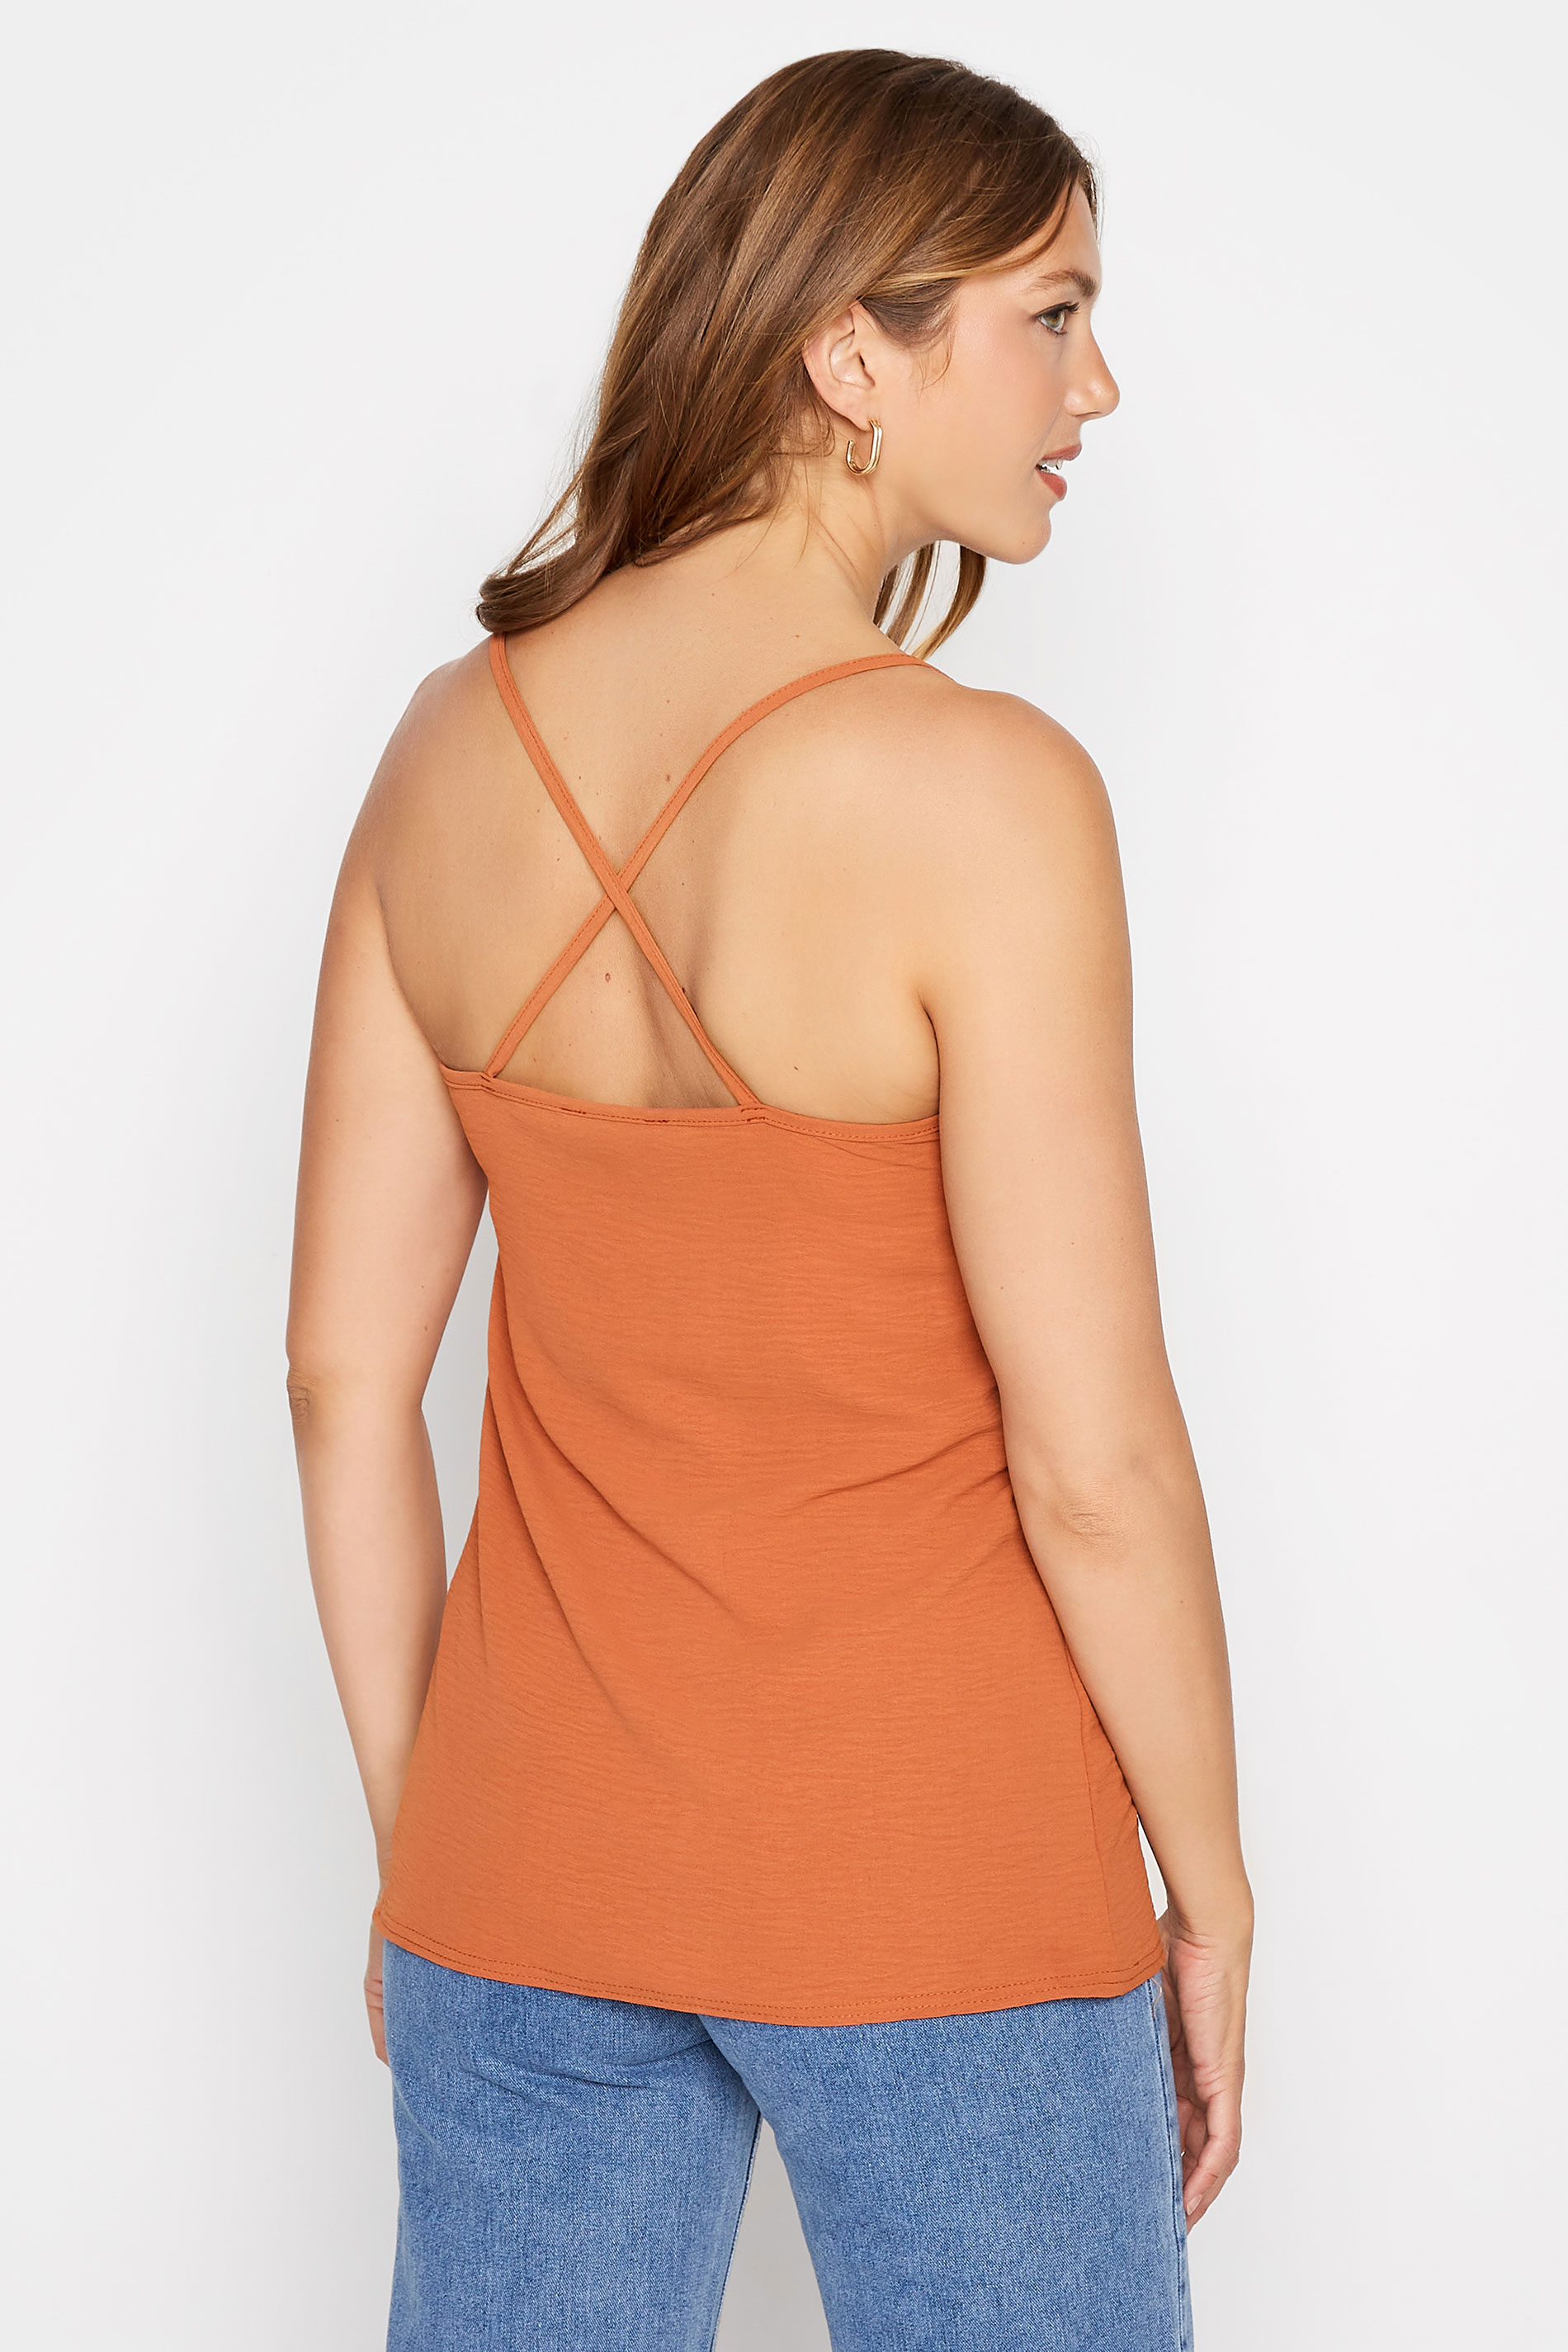 LTS Tall Women's Rust Orange Textured Cami Top | Long Tall Sally 3